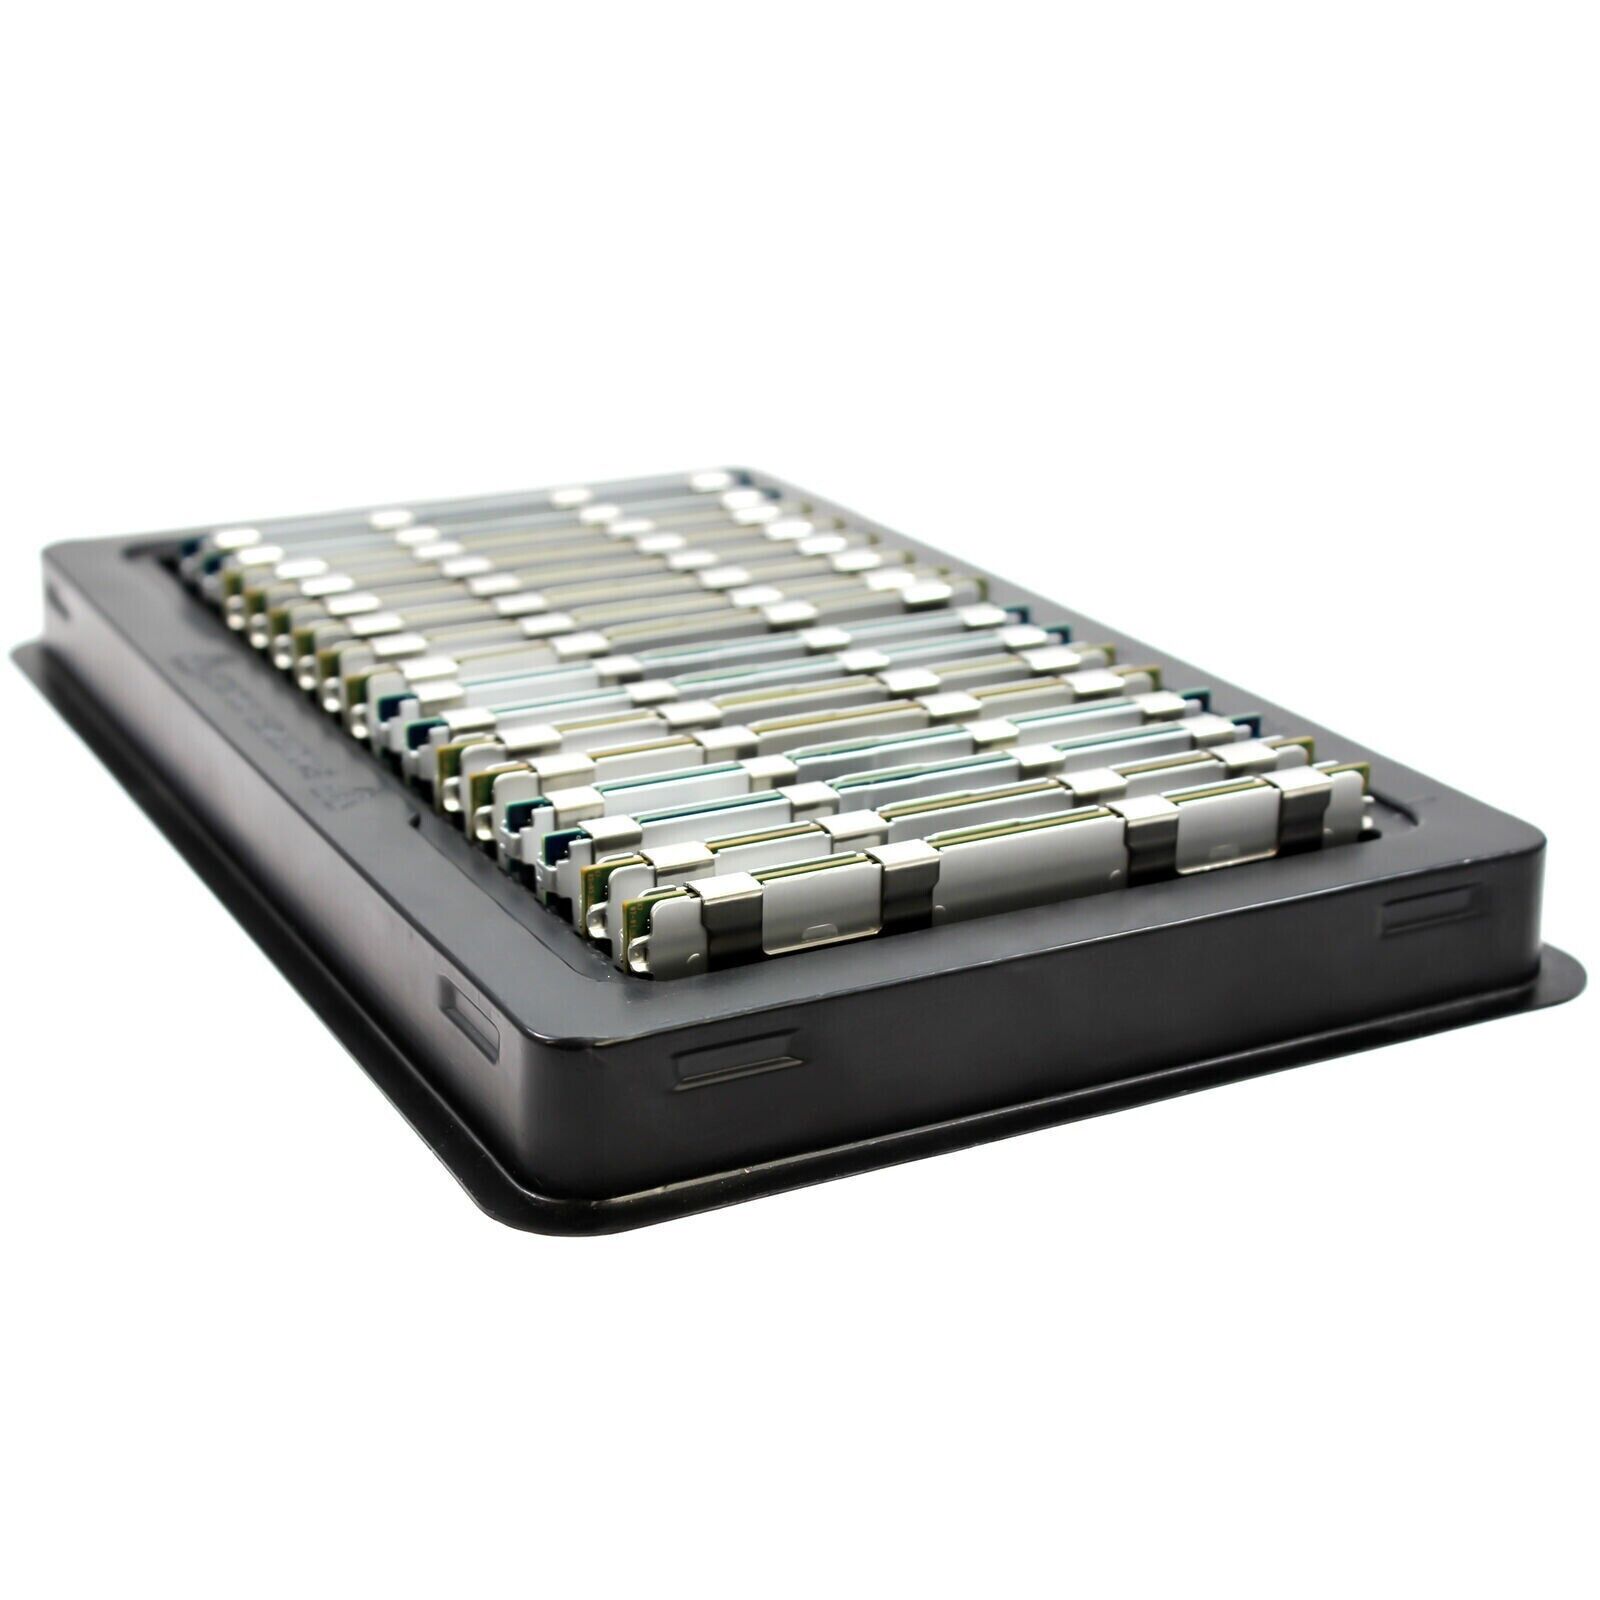 512GB (32x16GB) DDR3 PC3-8500R 4Rx4 ECC Reg Server Memory RAM for HP DL585 G7